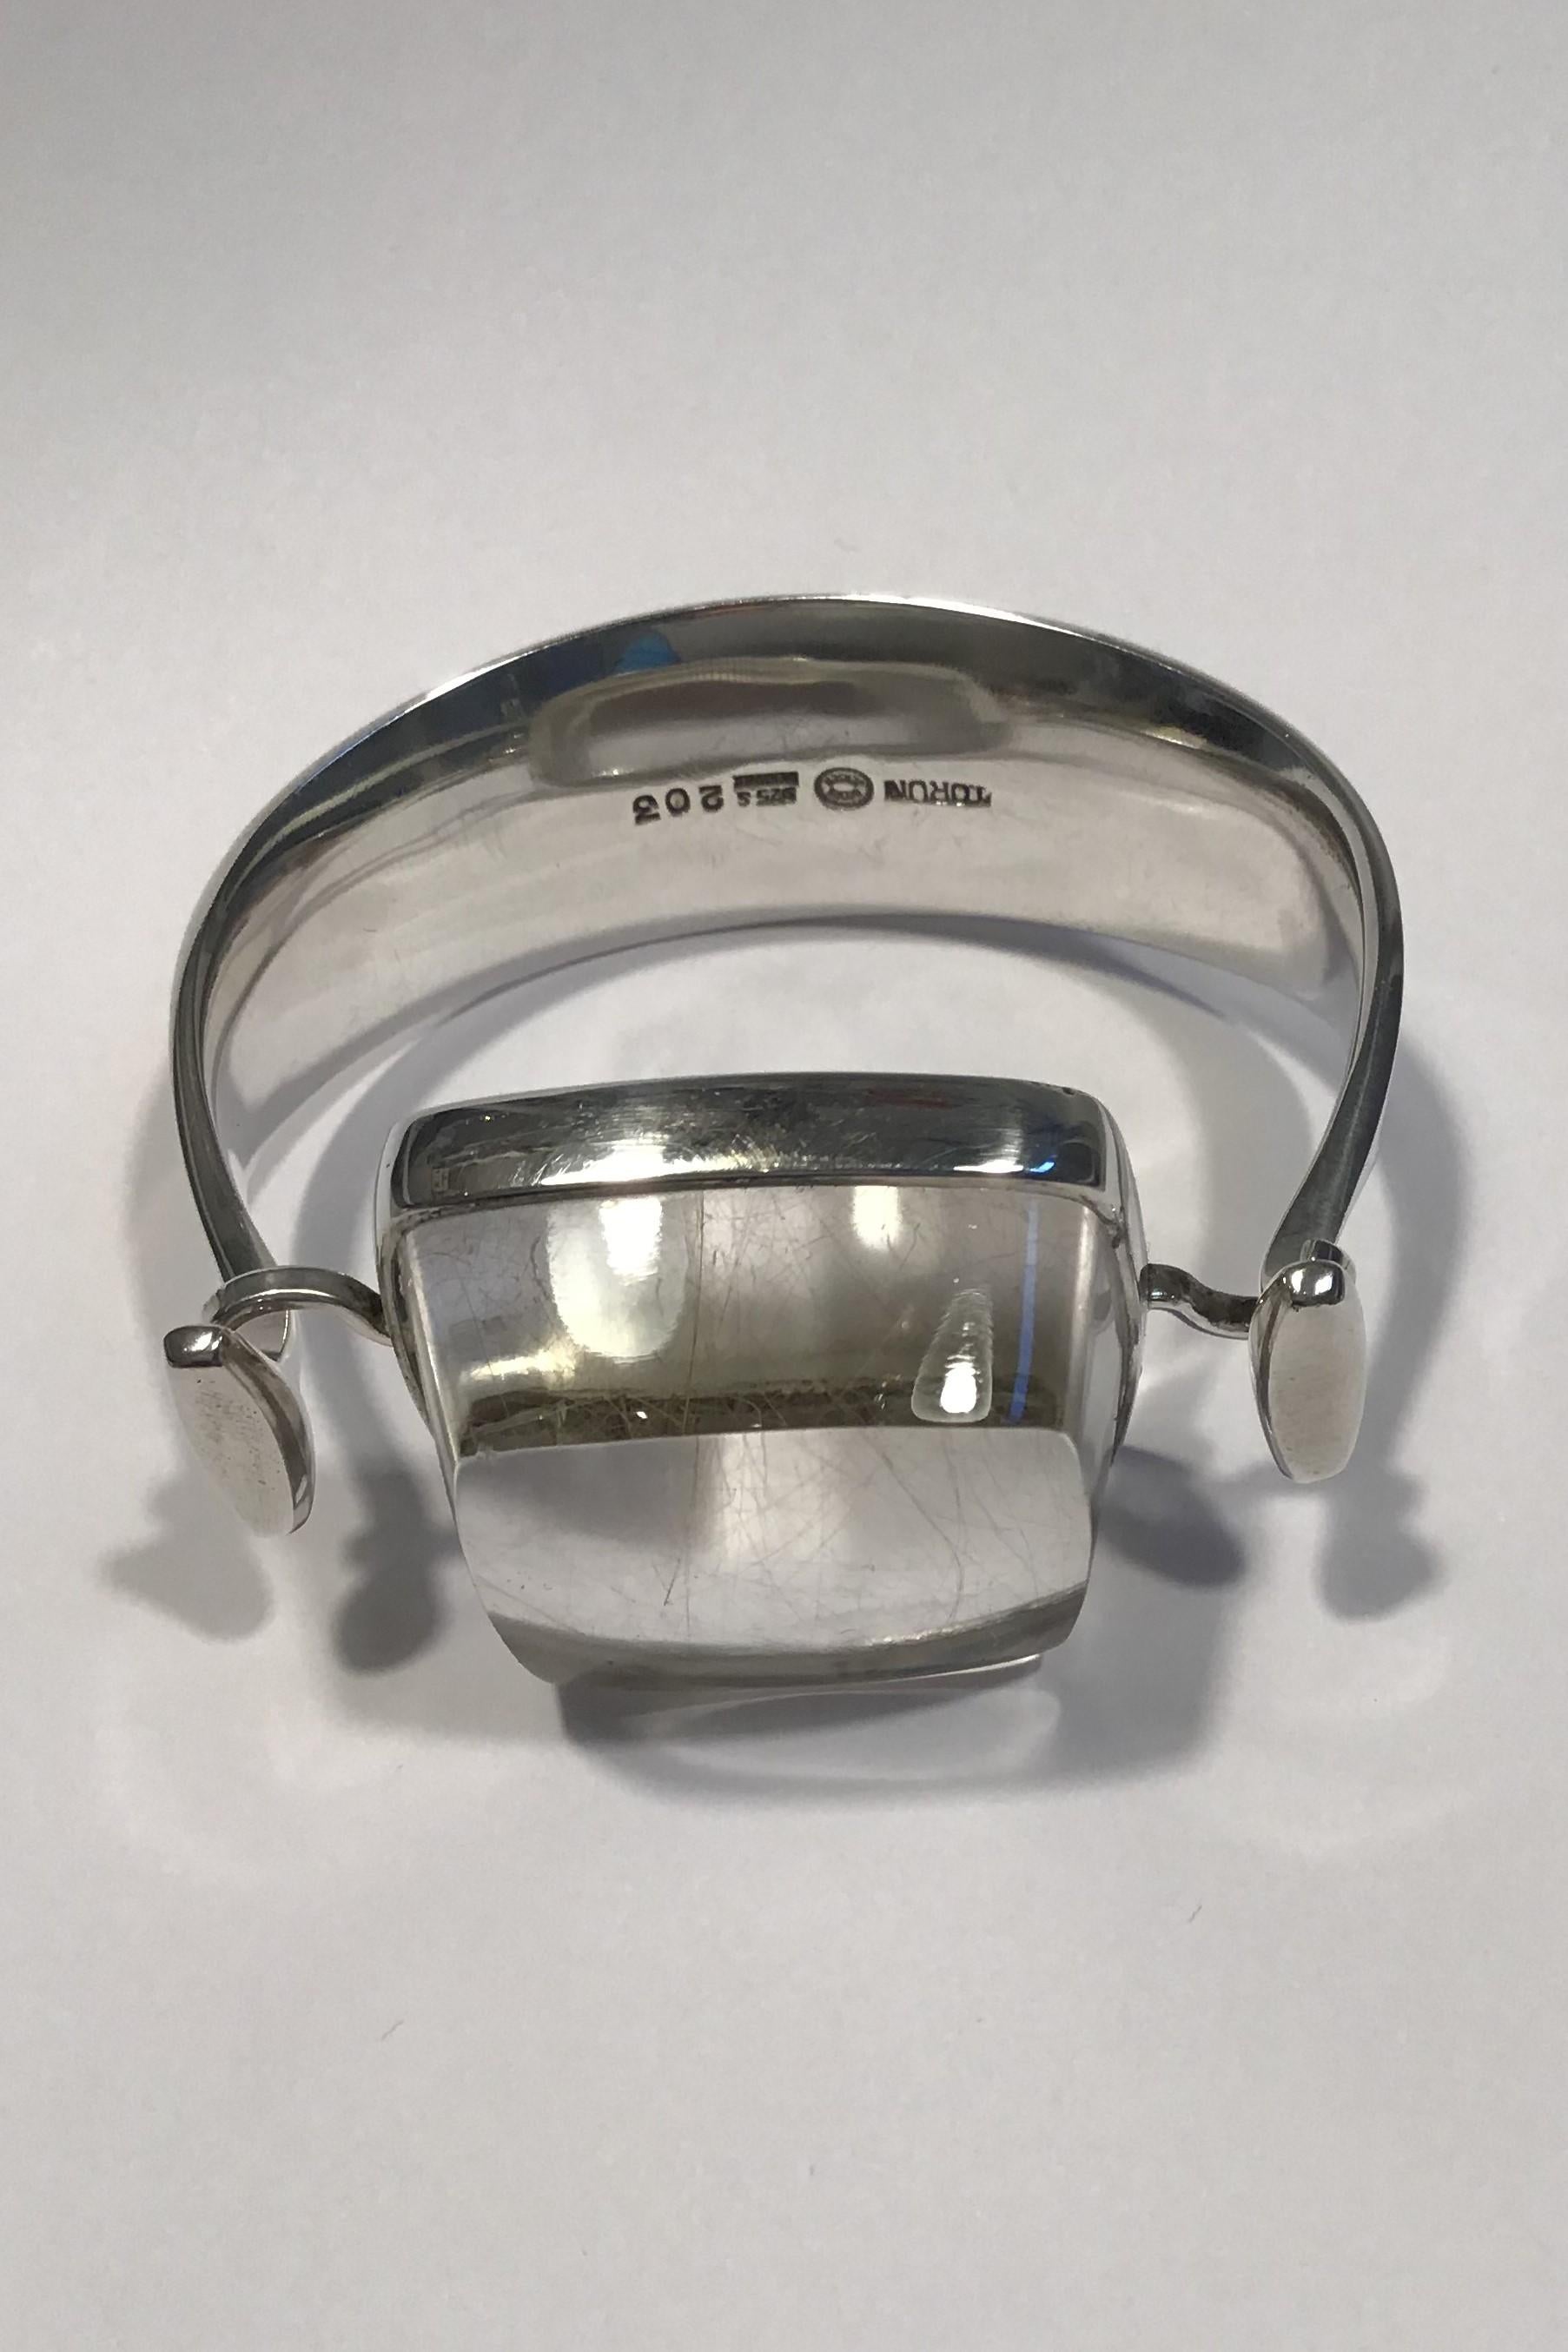 Georg Jensen Sterling Silver Arm Ring No 203 with Rutile Quartz Torun

Arm Ring dia 5.9 cm(2.32 in) 
Quartz 3.5 cm x 3.5 cm x 1.7 cm (1.37 in x 1.37 in x 0.67 in) 
Combined weight 83.1 gr/2.93 oz